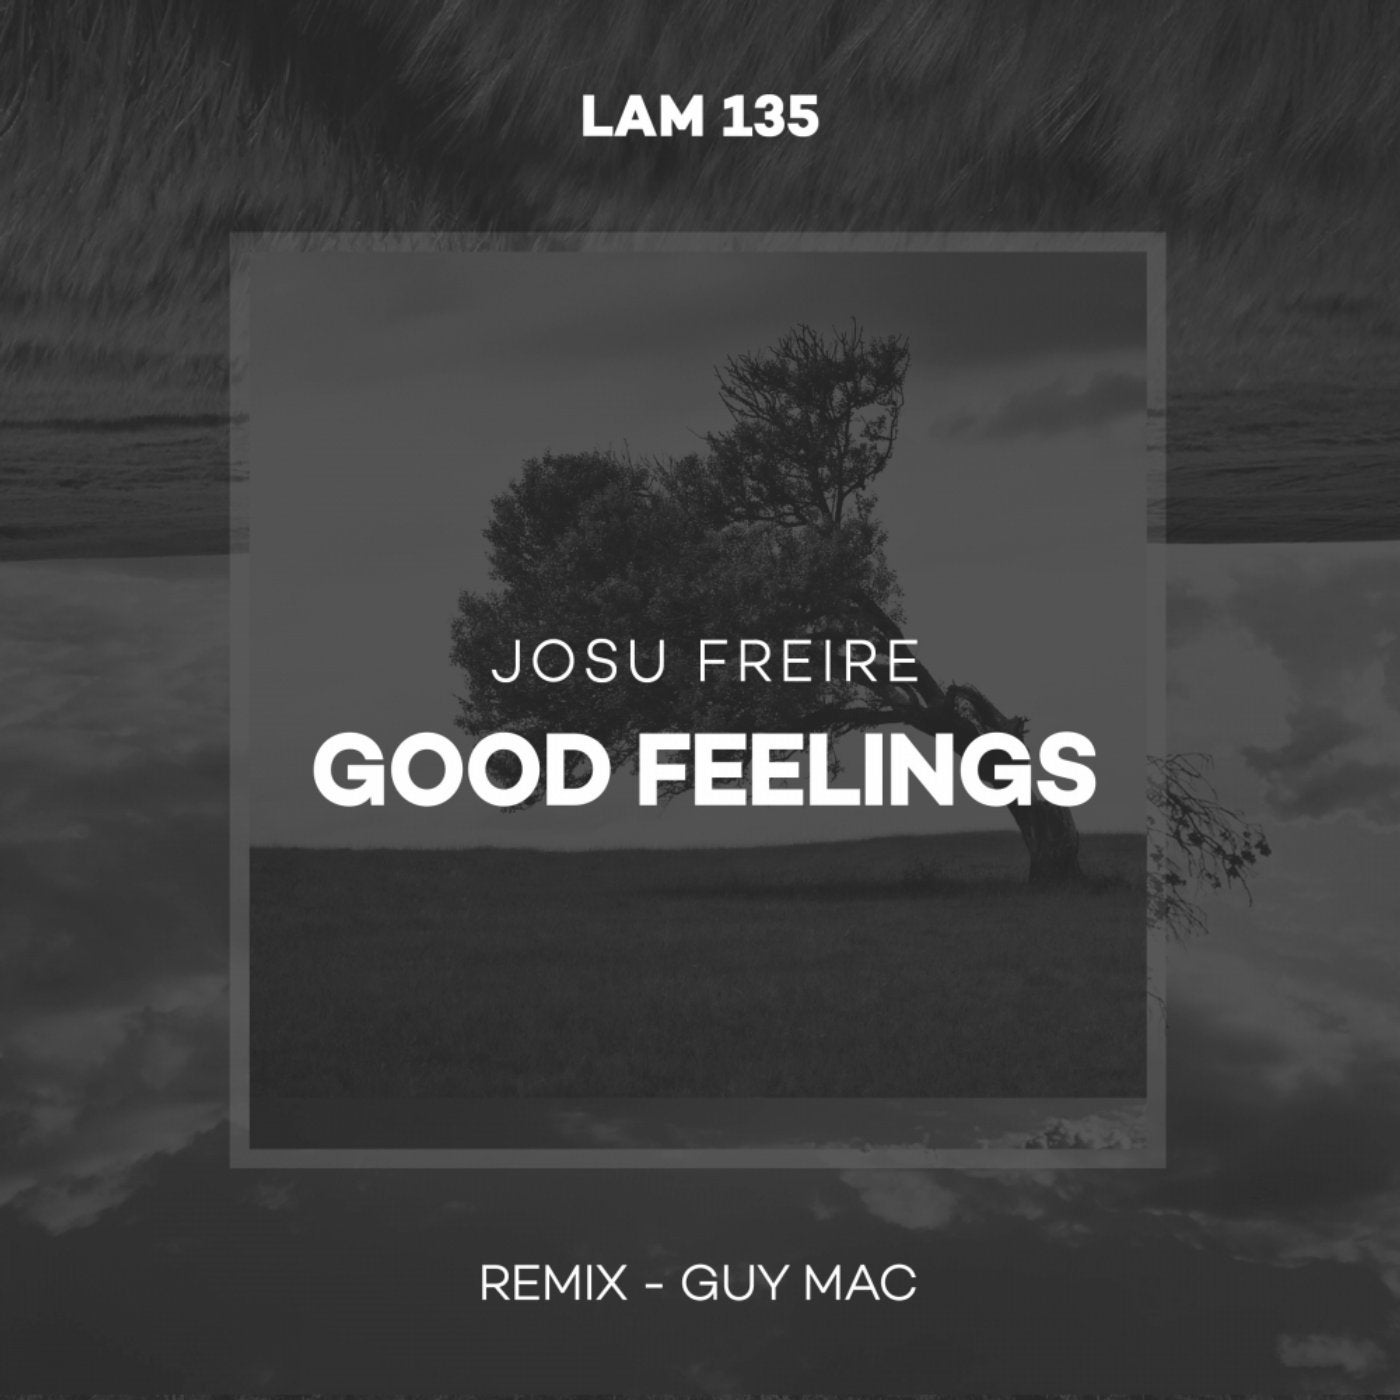 Sound good feels good. Feeling good оригинал. Feeling good Некрасова. Timmo - feel good (Original Mix). Avicii_-_feel good.